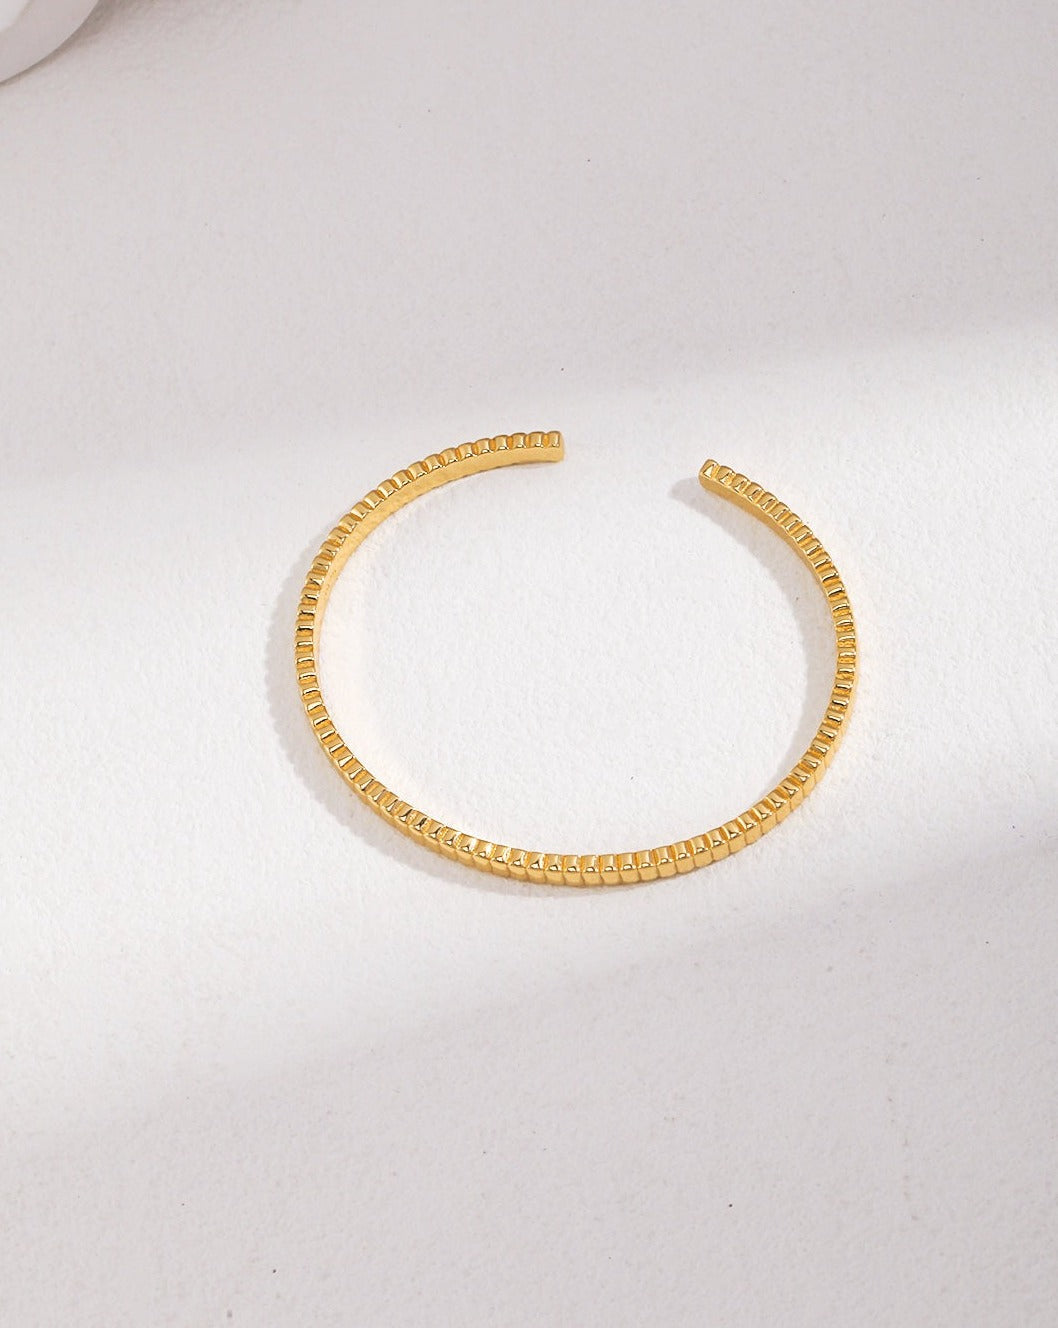 fashion-jewelry-minimalist-jewelry-design-jewelry-set-necklace-pearl-earring-gold-coated-silver-bijoux-minimalist-bracelets-ring